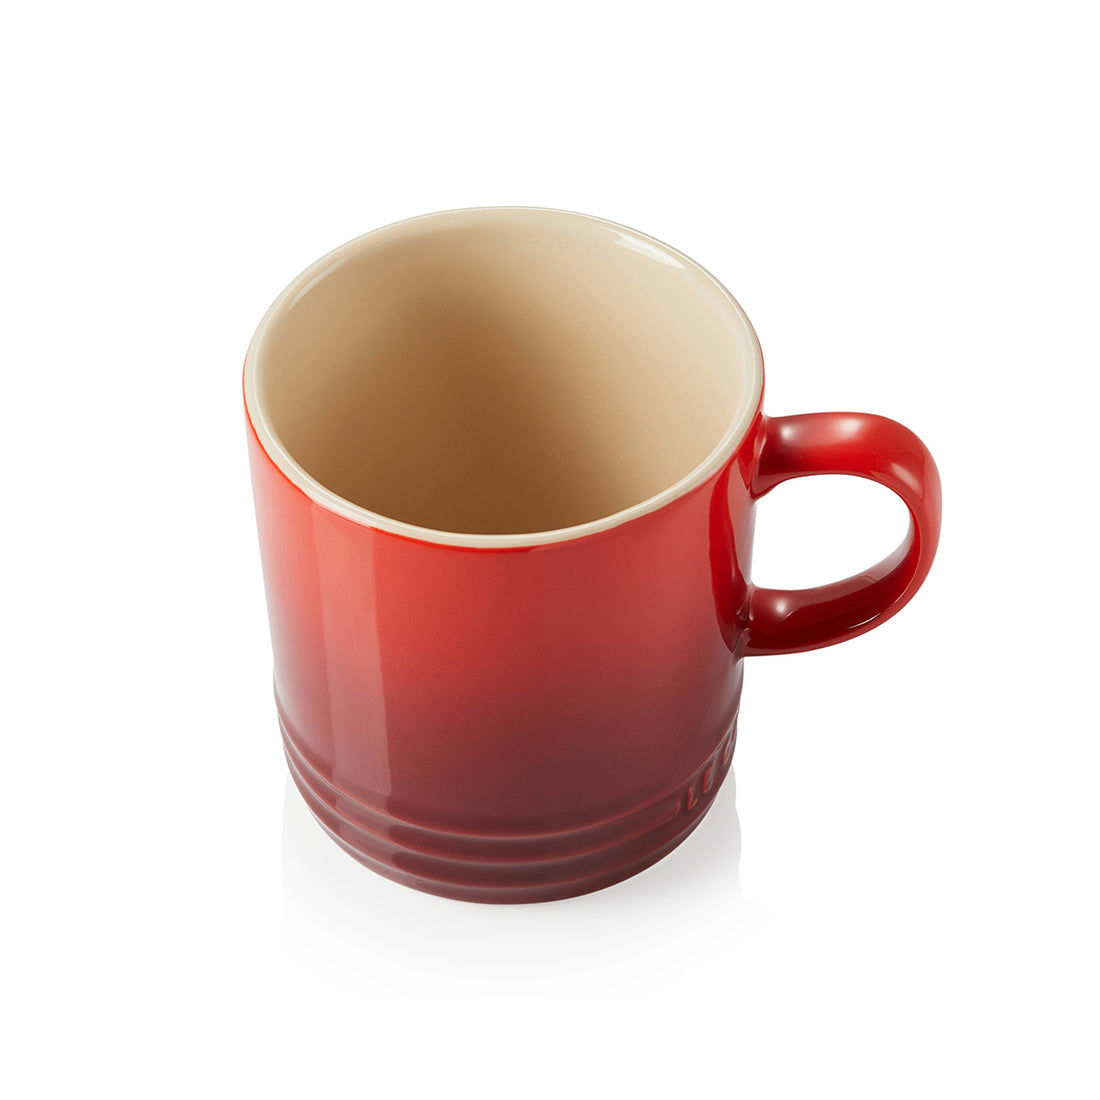 Le Creuset, Le Creuset Stoneware Mug - Cerise, Redber Coffee